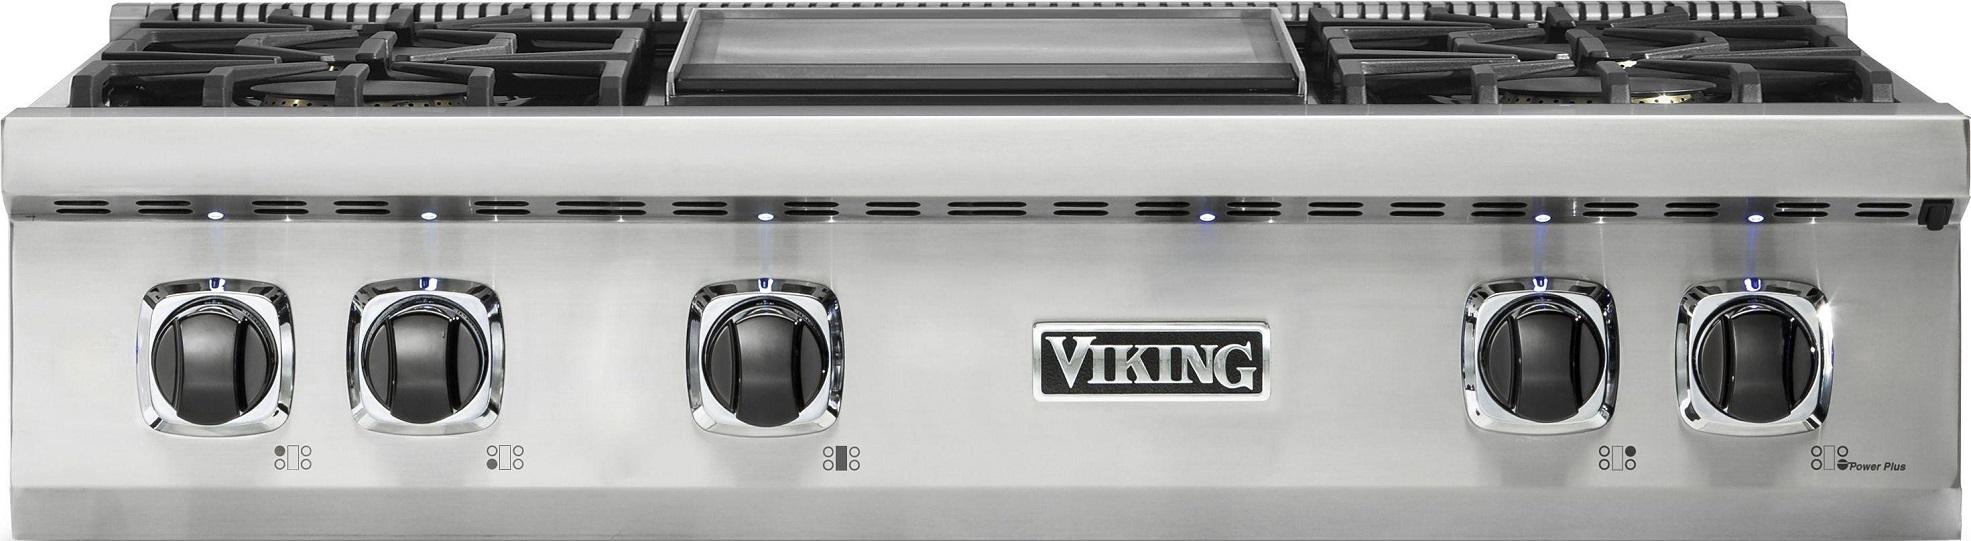 Viking VRT5364GSS